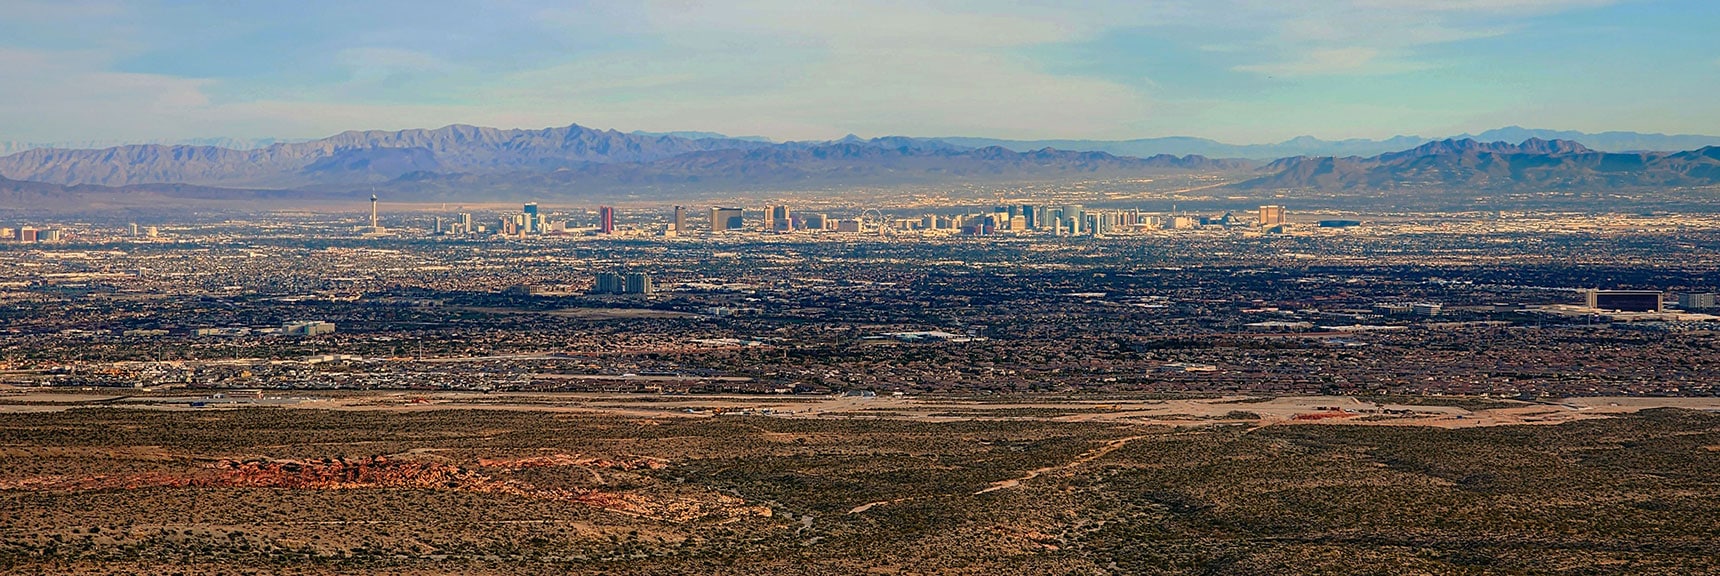 Vegas Strip and Beyond | Damsel Peak Southeastern Slope | Calico & Brownstone Basins, Nevada